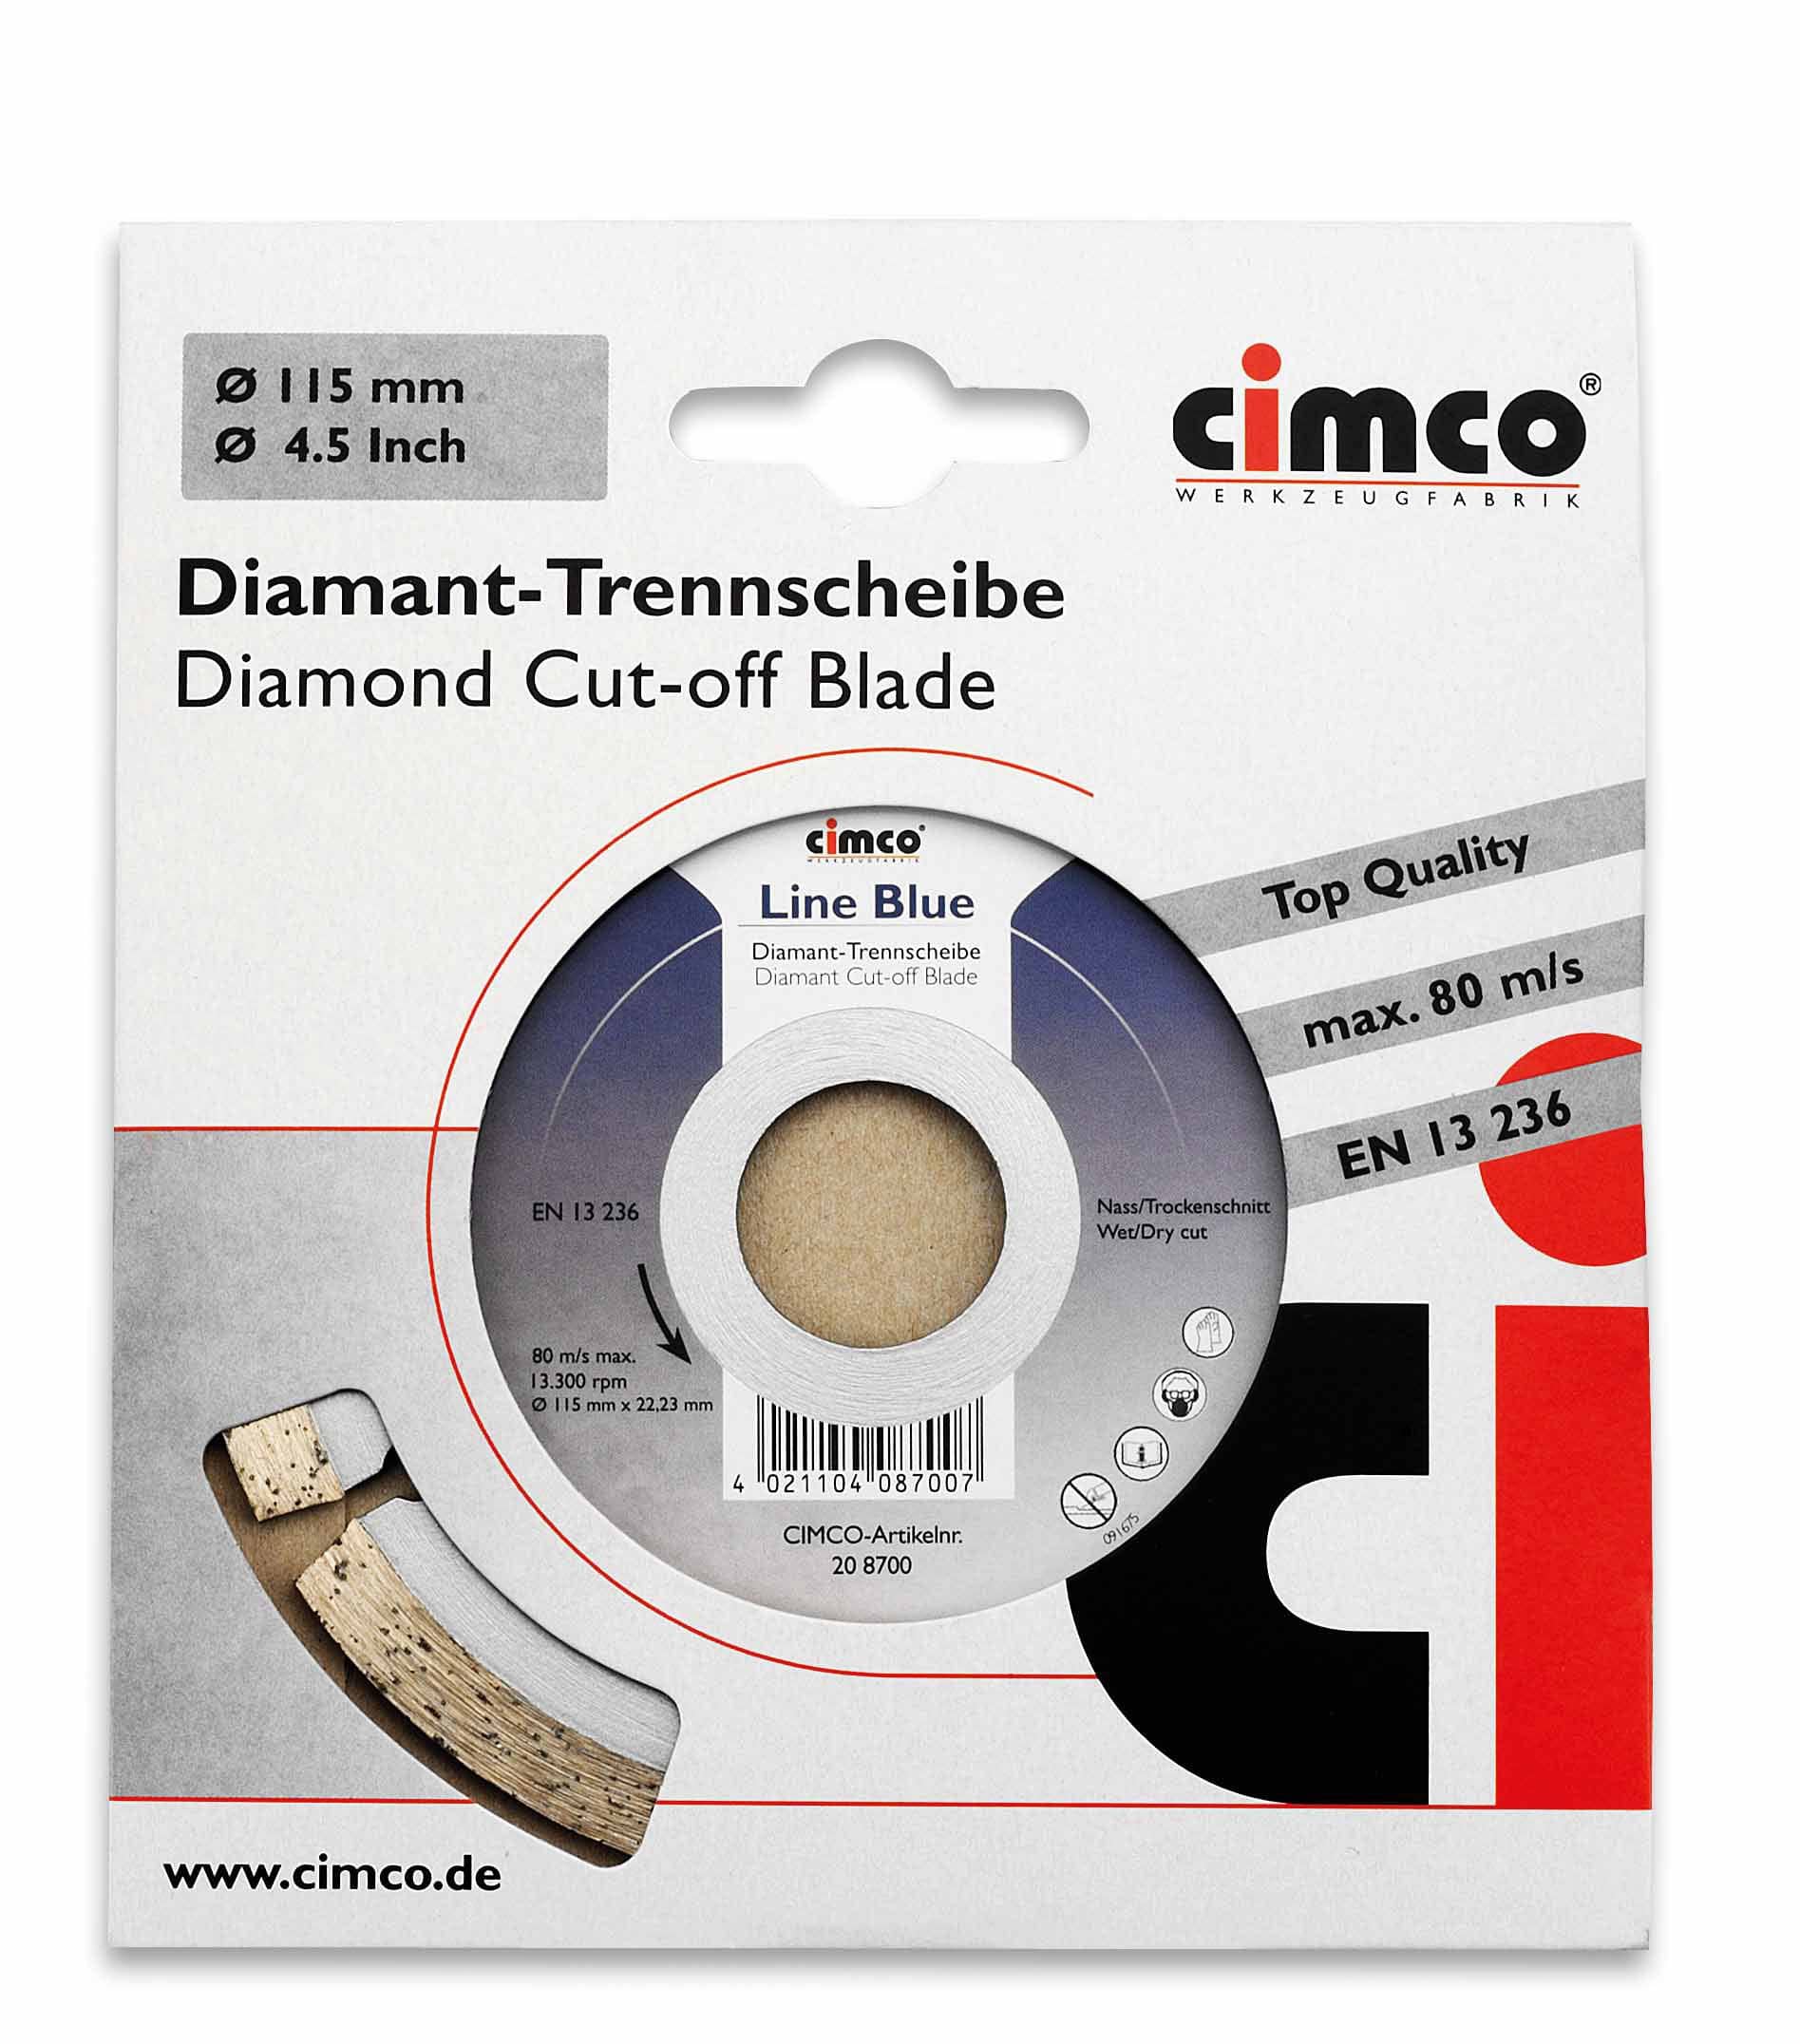 Cimco 20 8700 Diamant-Trennscheibe Line Blue, Pflaster Ø 115 mm